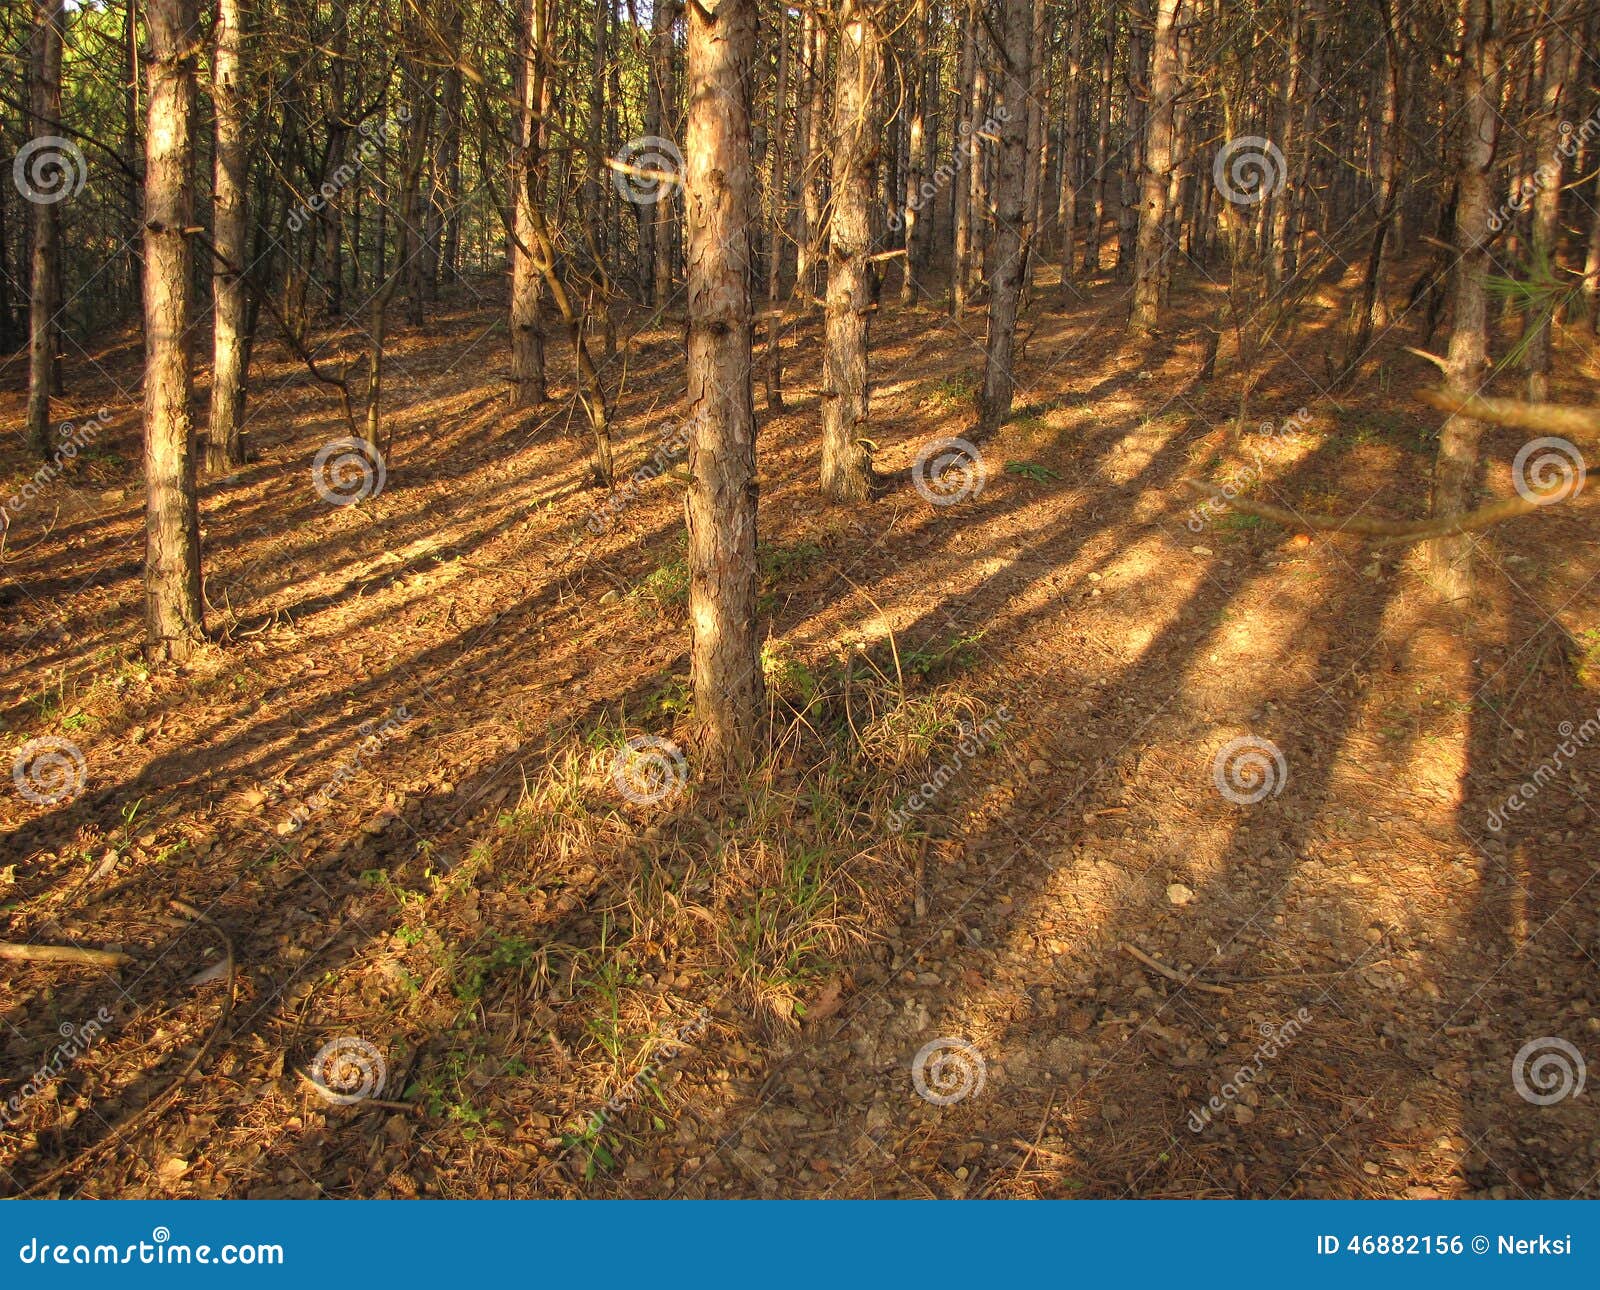 Autumn moods stock photo. Image of land, trees, fall - 46882156